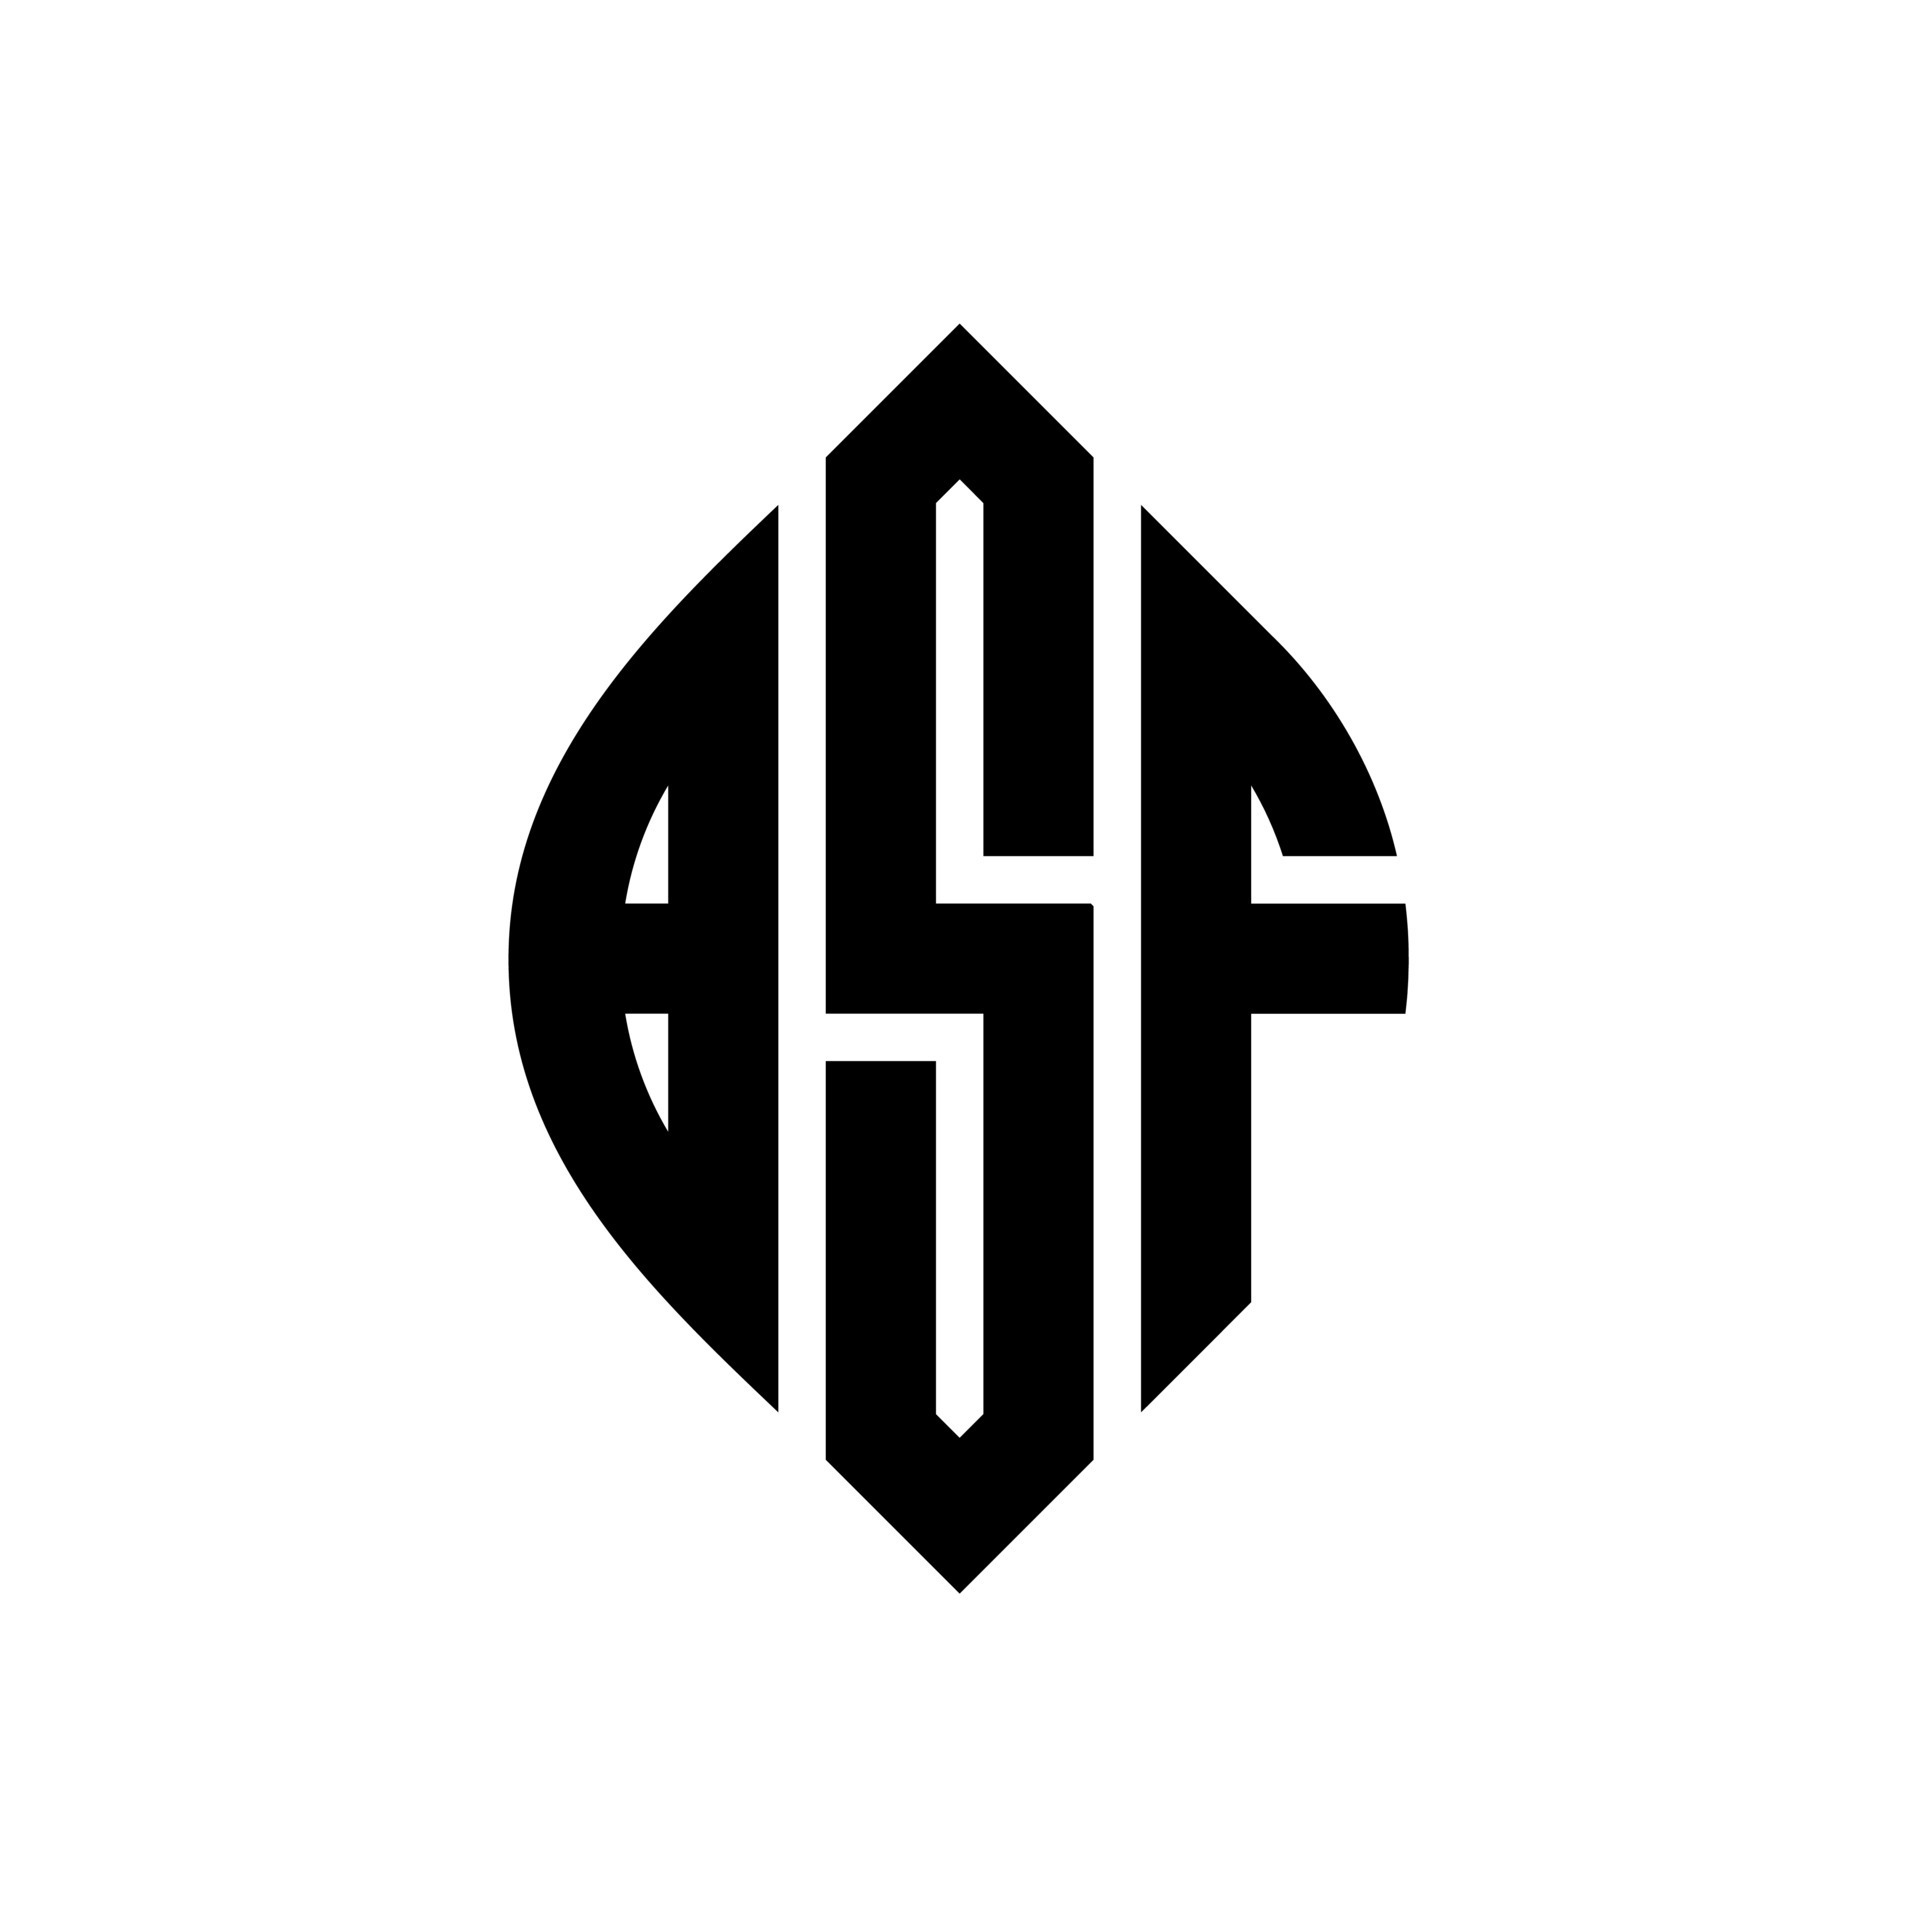 Premium Vector | Bsf logo design. bsf letters vector logo design. letter  logos in blue tones